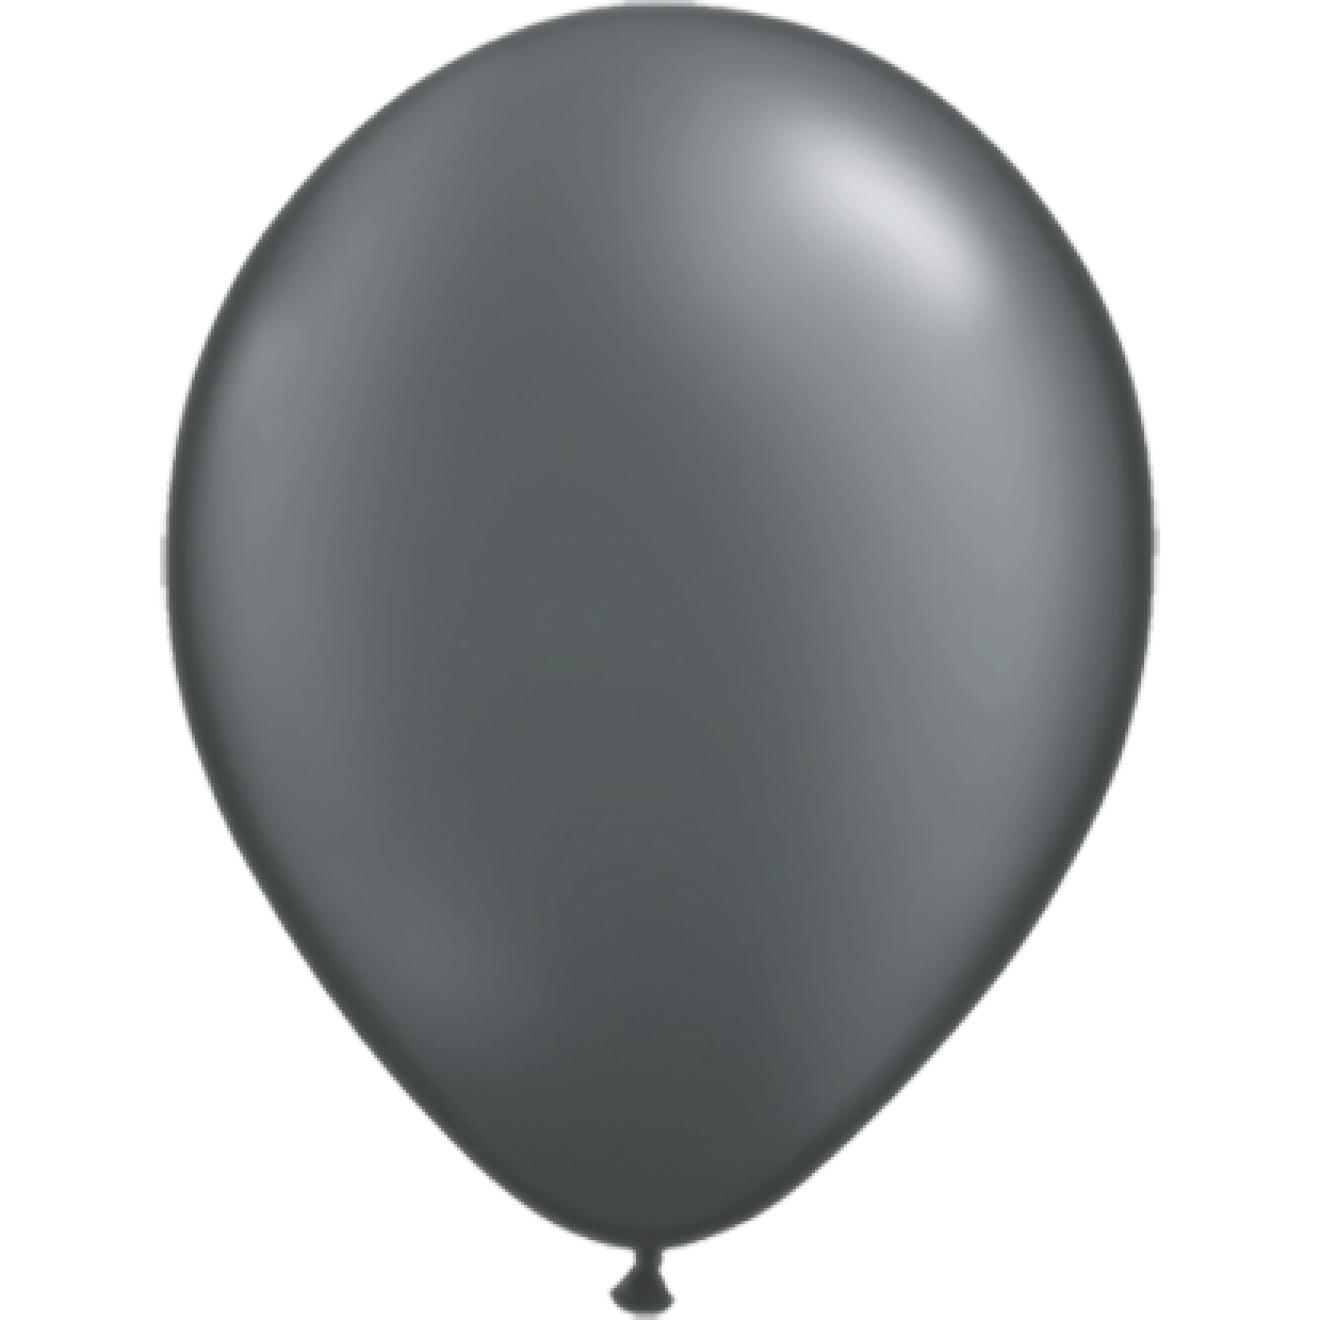 SALE Latex-Luftballons Ø 25 cm rund bunt 100 Stk Dekoballons Ballon Raumdeko 